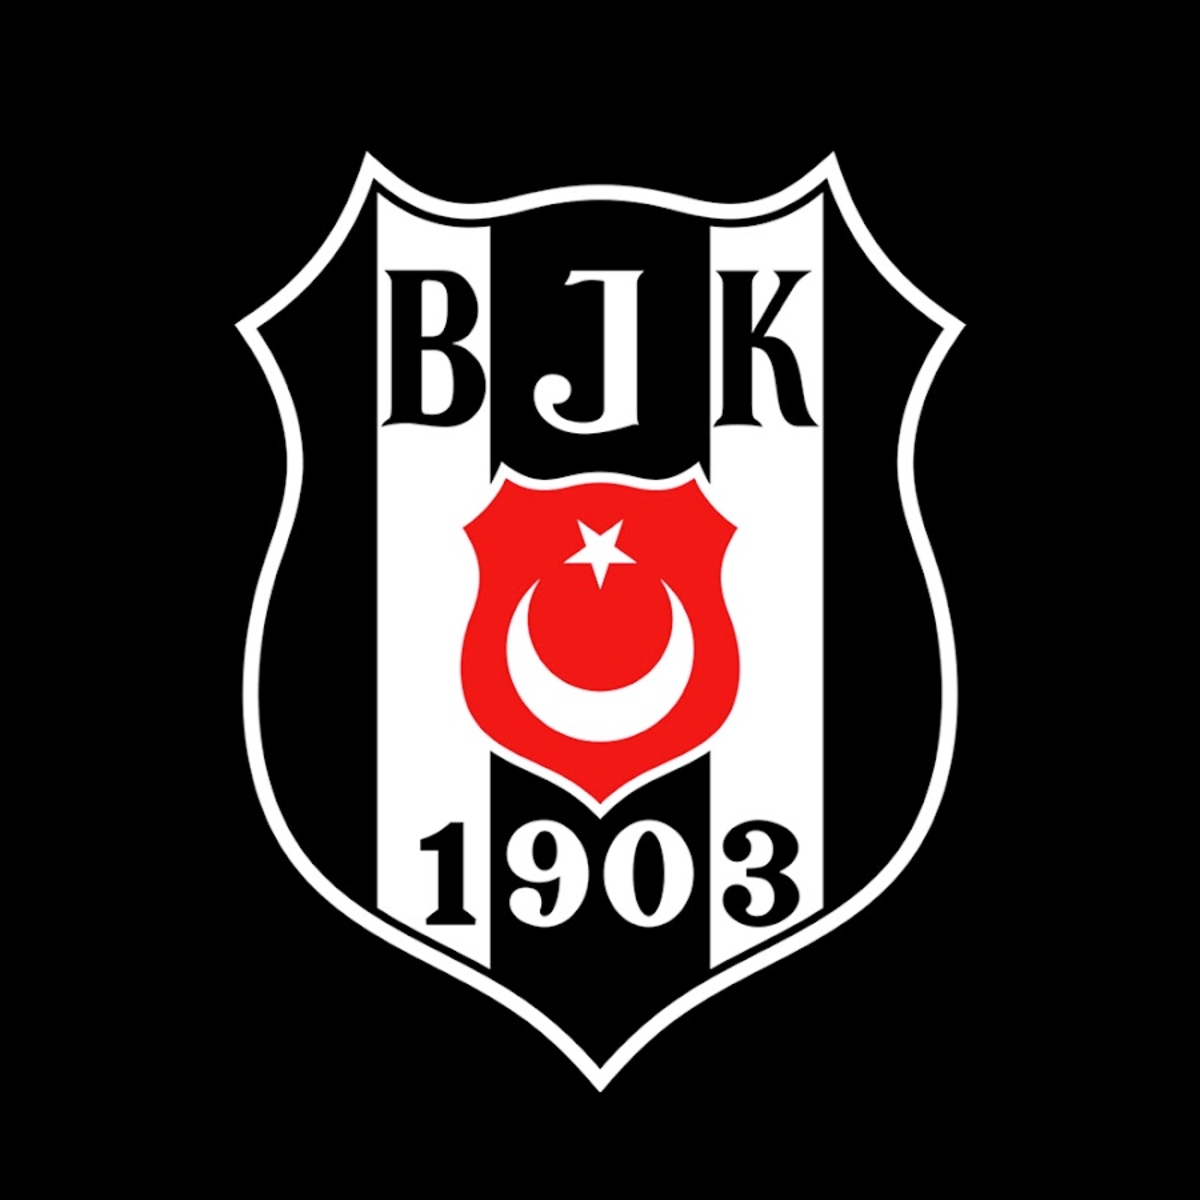 Vodafone Arena, Team Vodafone, Beşiktaş J.K., Turkish Cup, ricardo  Quaresma, bjk, beşiktaş Jk Football Team, Super League, Beşiktaş, football  Team